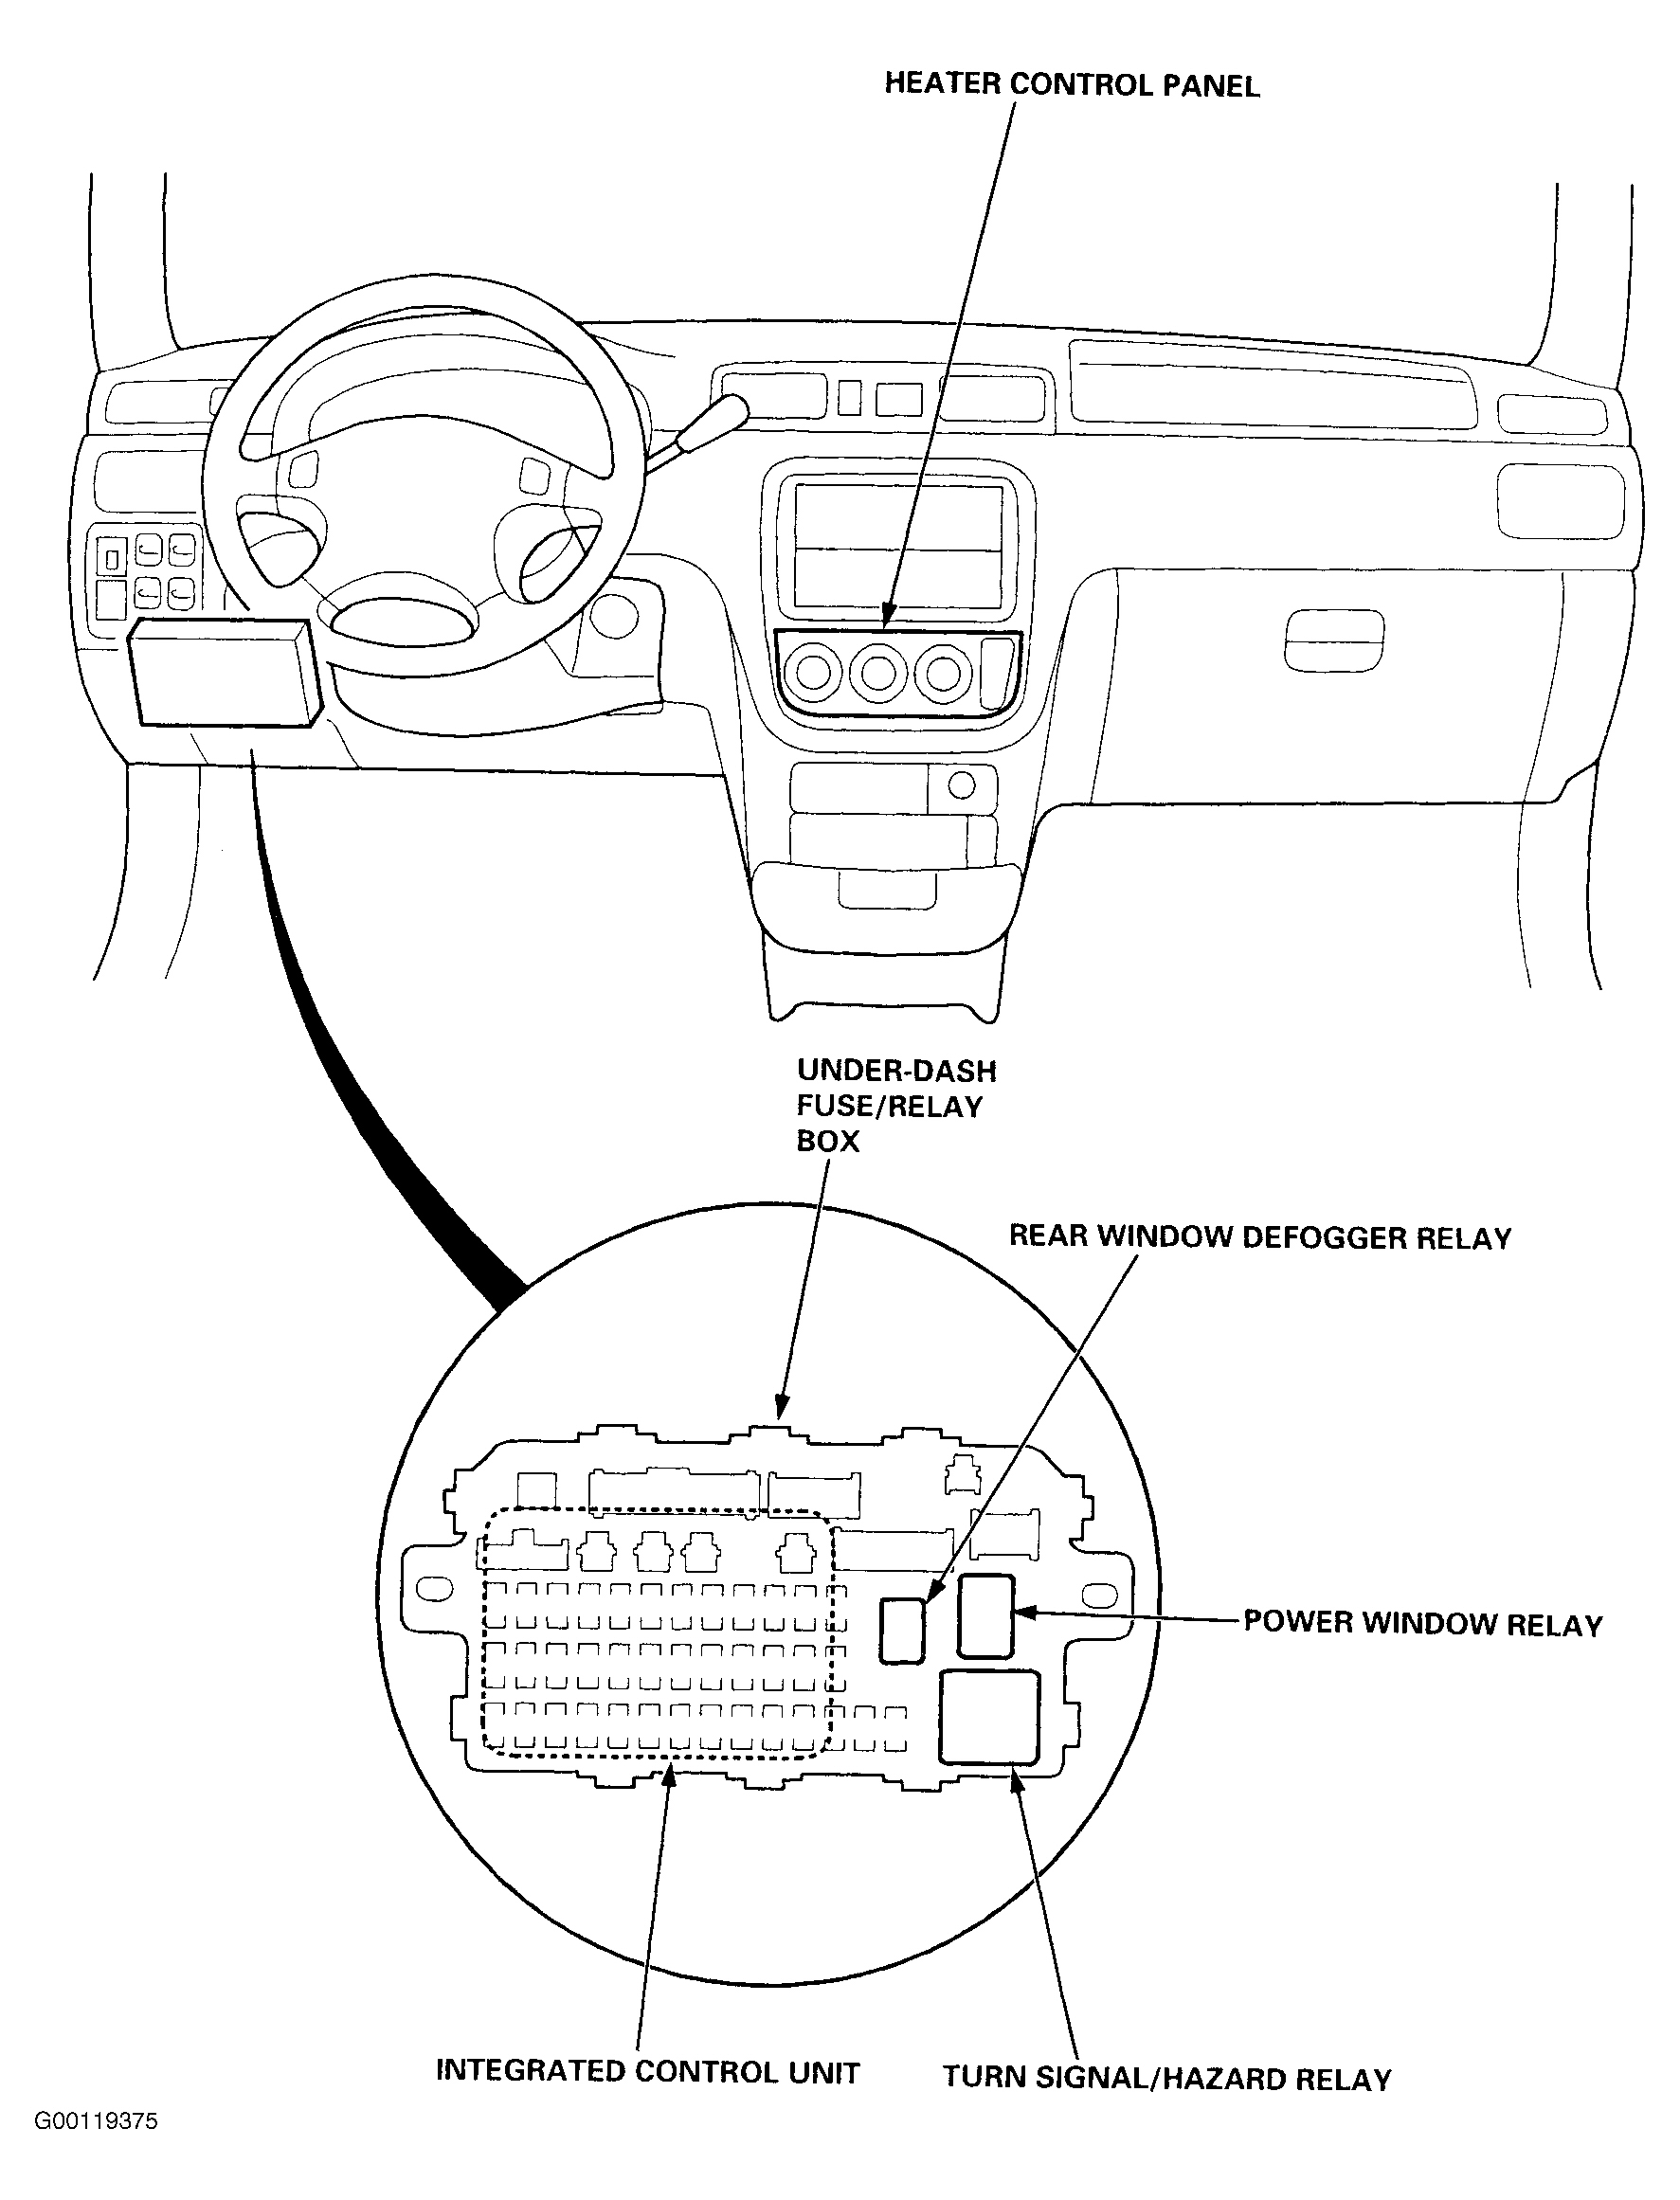 Honda CR-V LX 2001 - Component Locations -  Locating Under-Dash Fuse/Relay Box